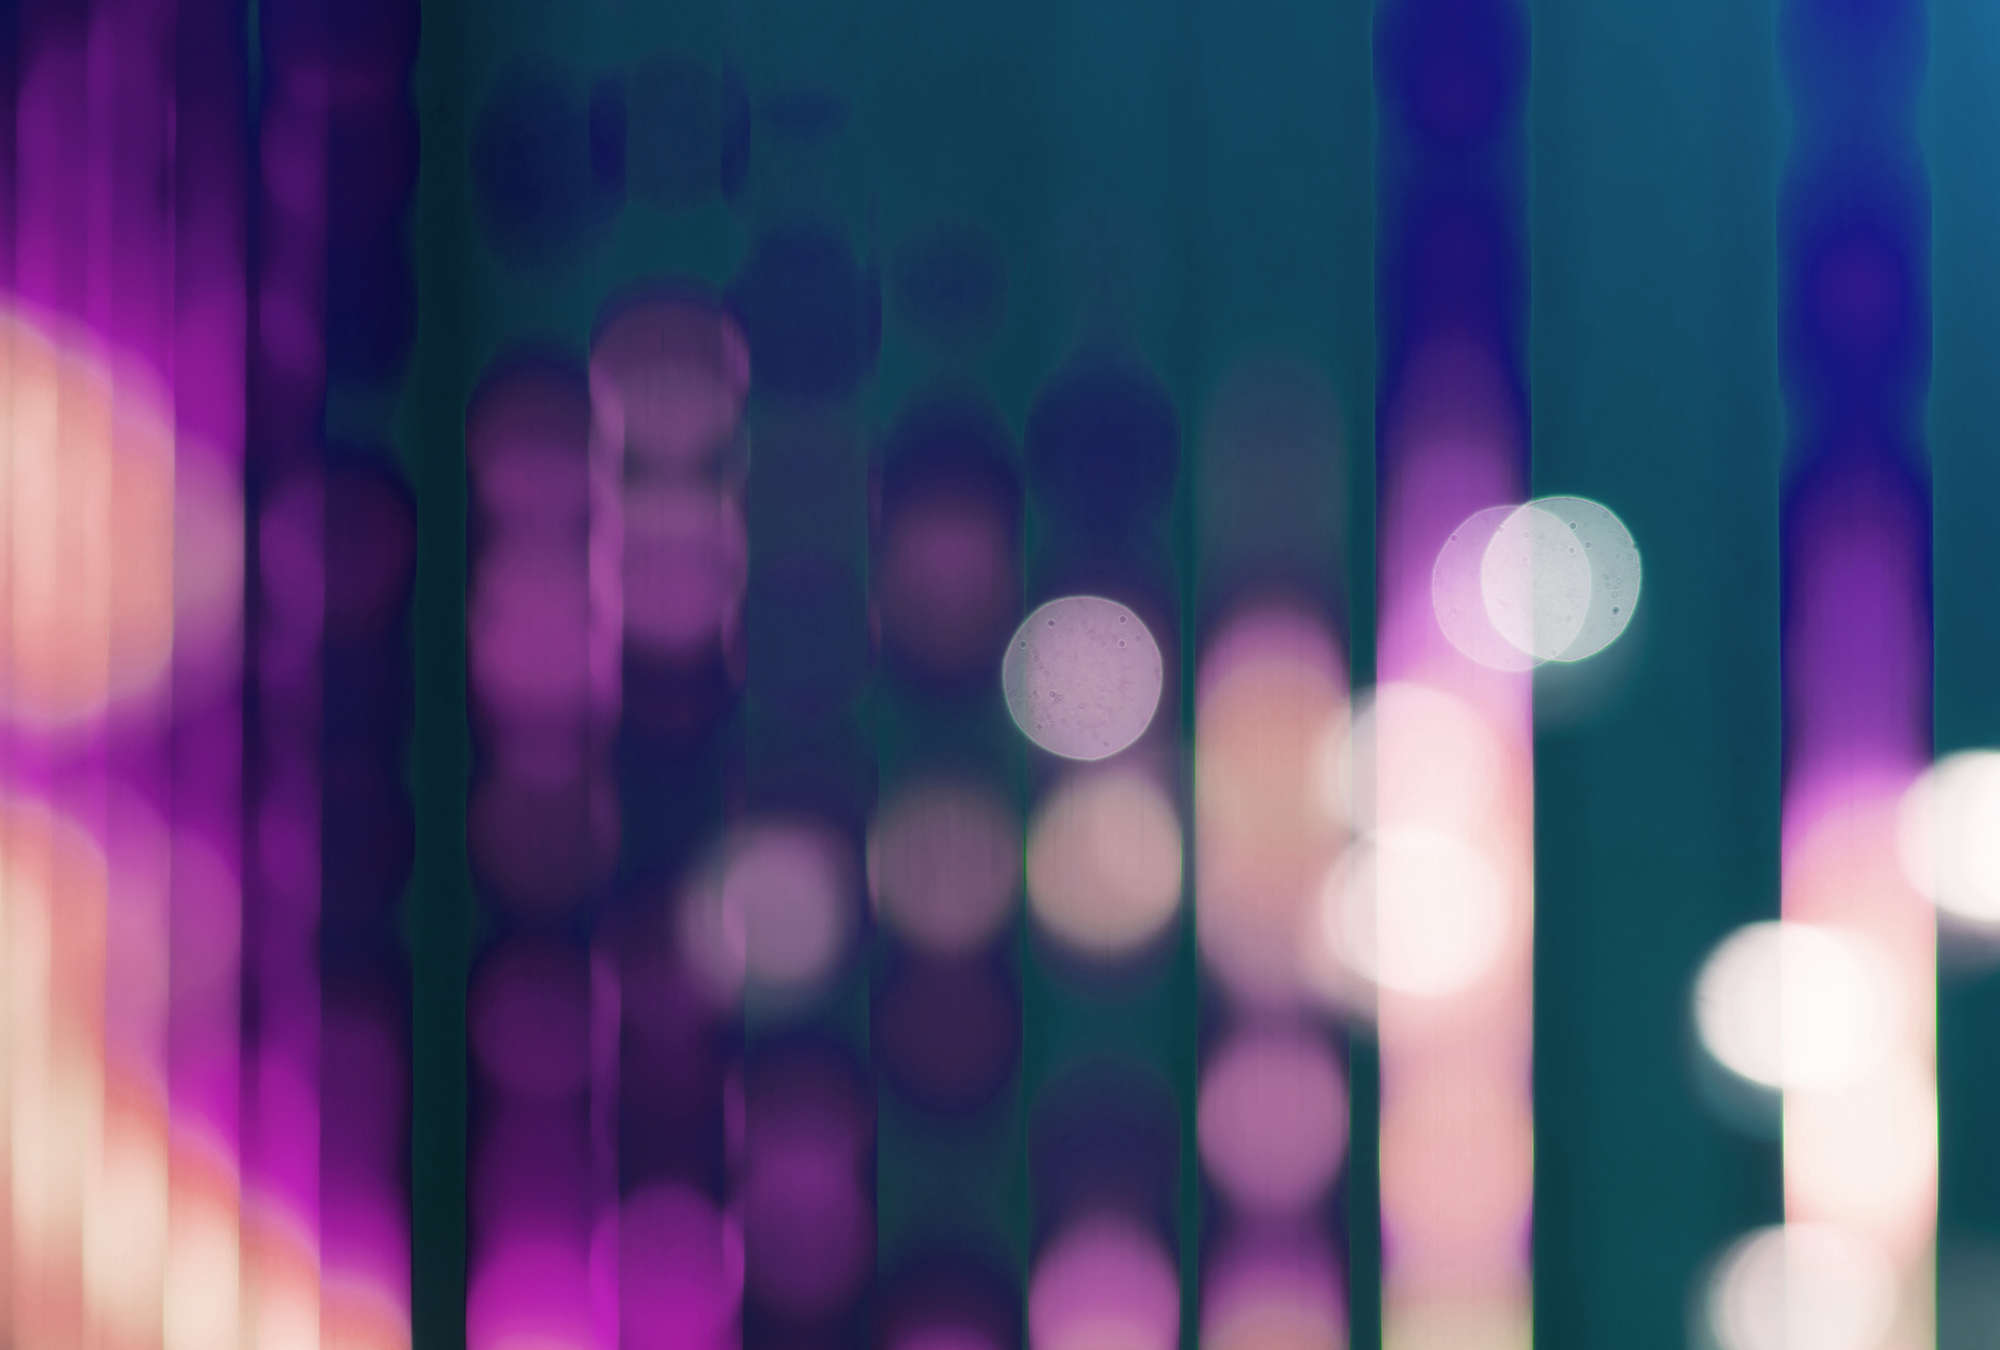             Big City Lights 3 - Fototapete mit Lichtreflexe in Violett – Blau, Violett | Premium Glattvlies
        